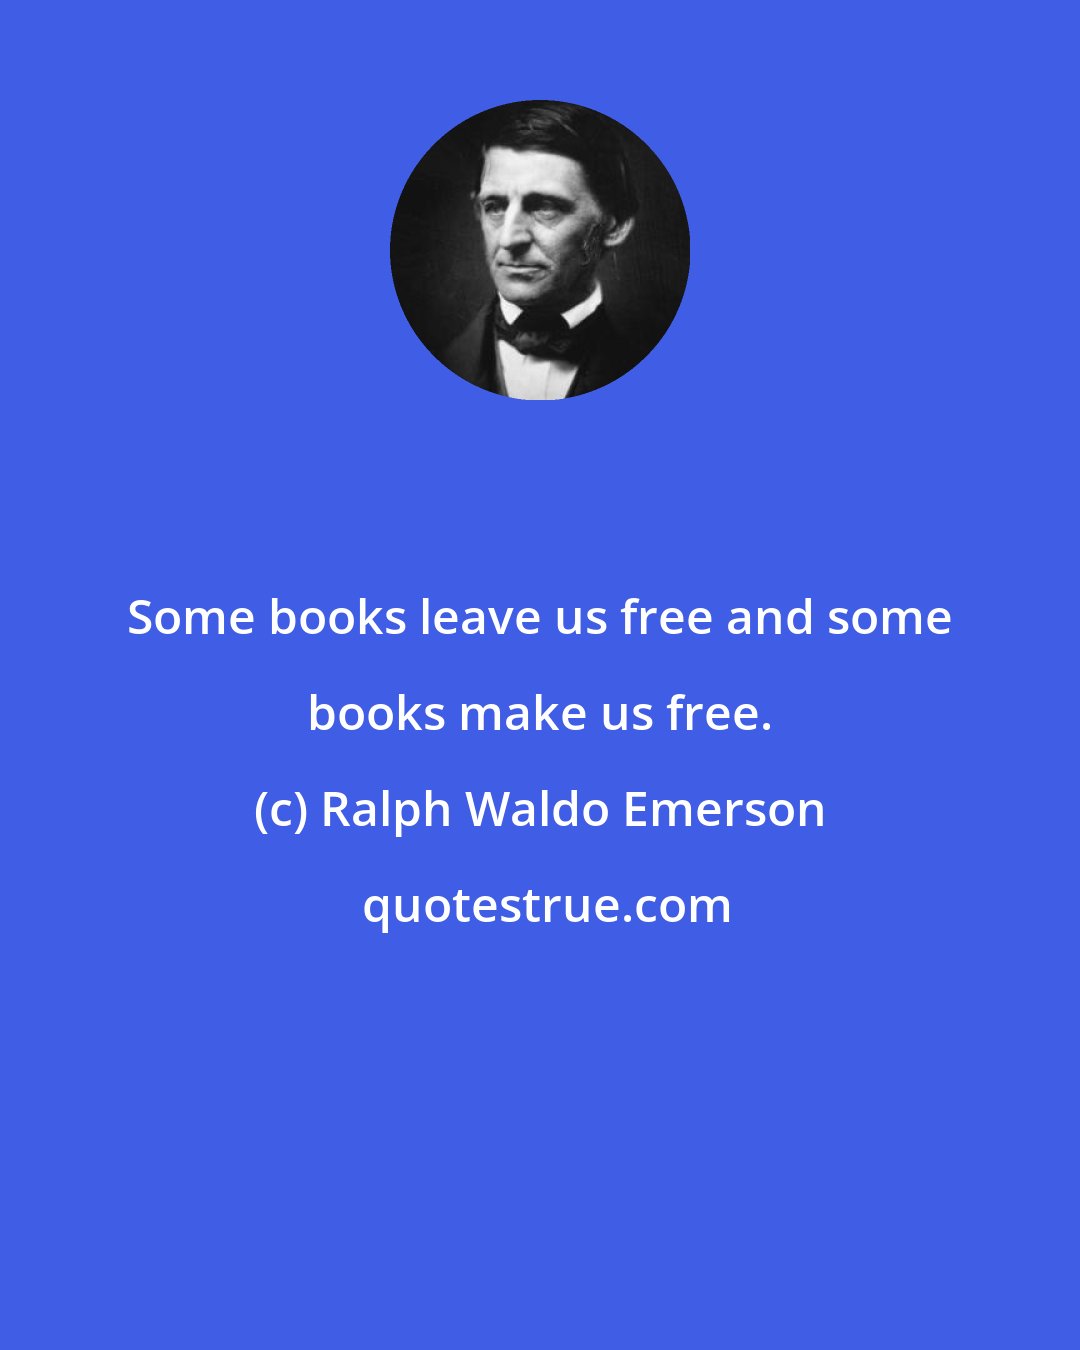 Ralph Waldo Emerson: Some books leave us free and some books make us free.